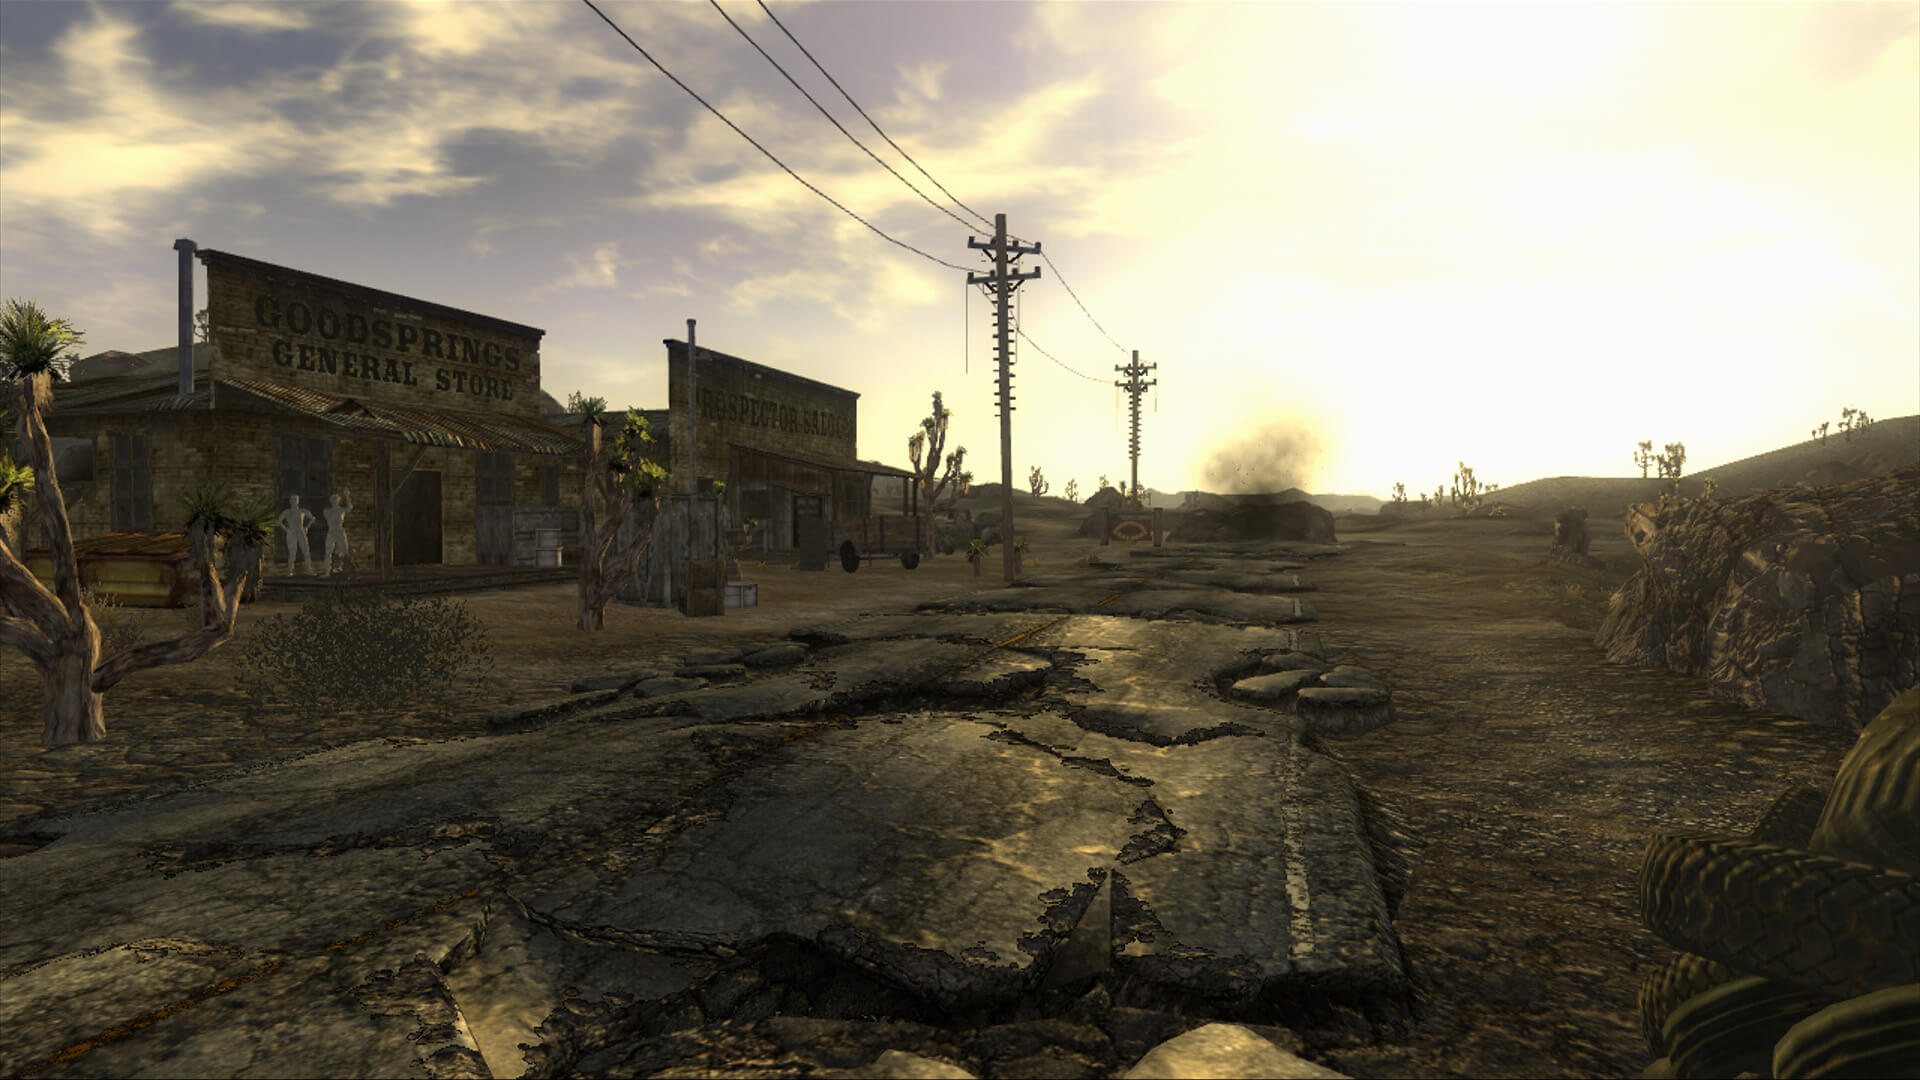 Epic游戏商城5月26日《Fallout: New Vegas终极版》免费领取地址